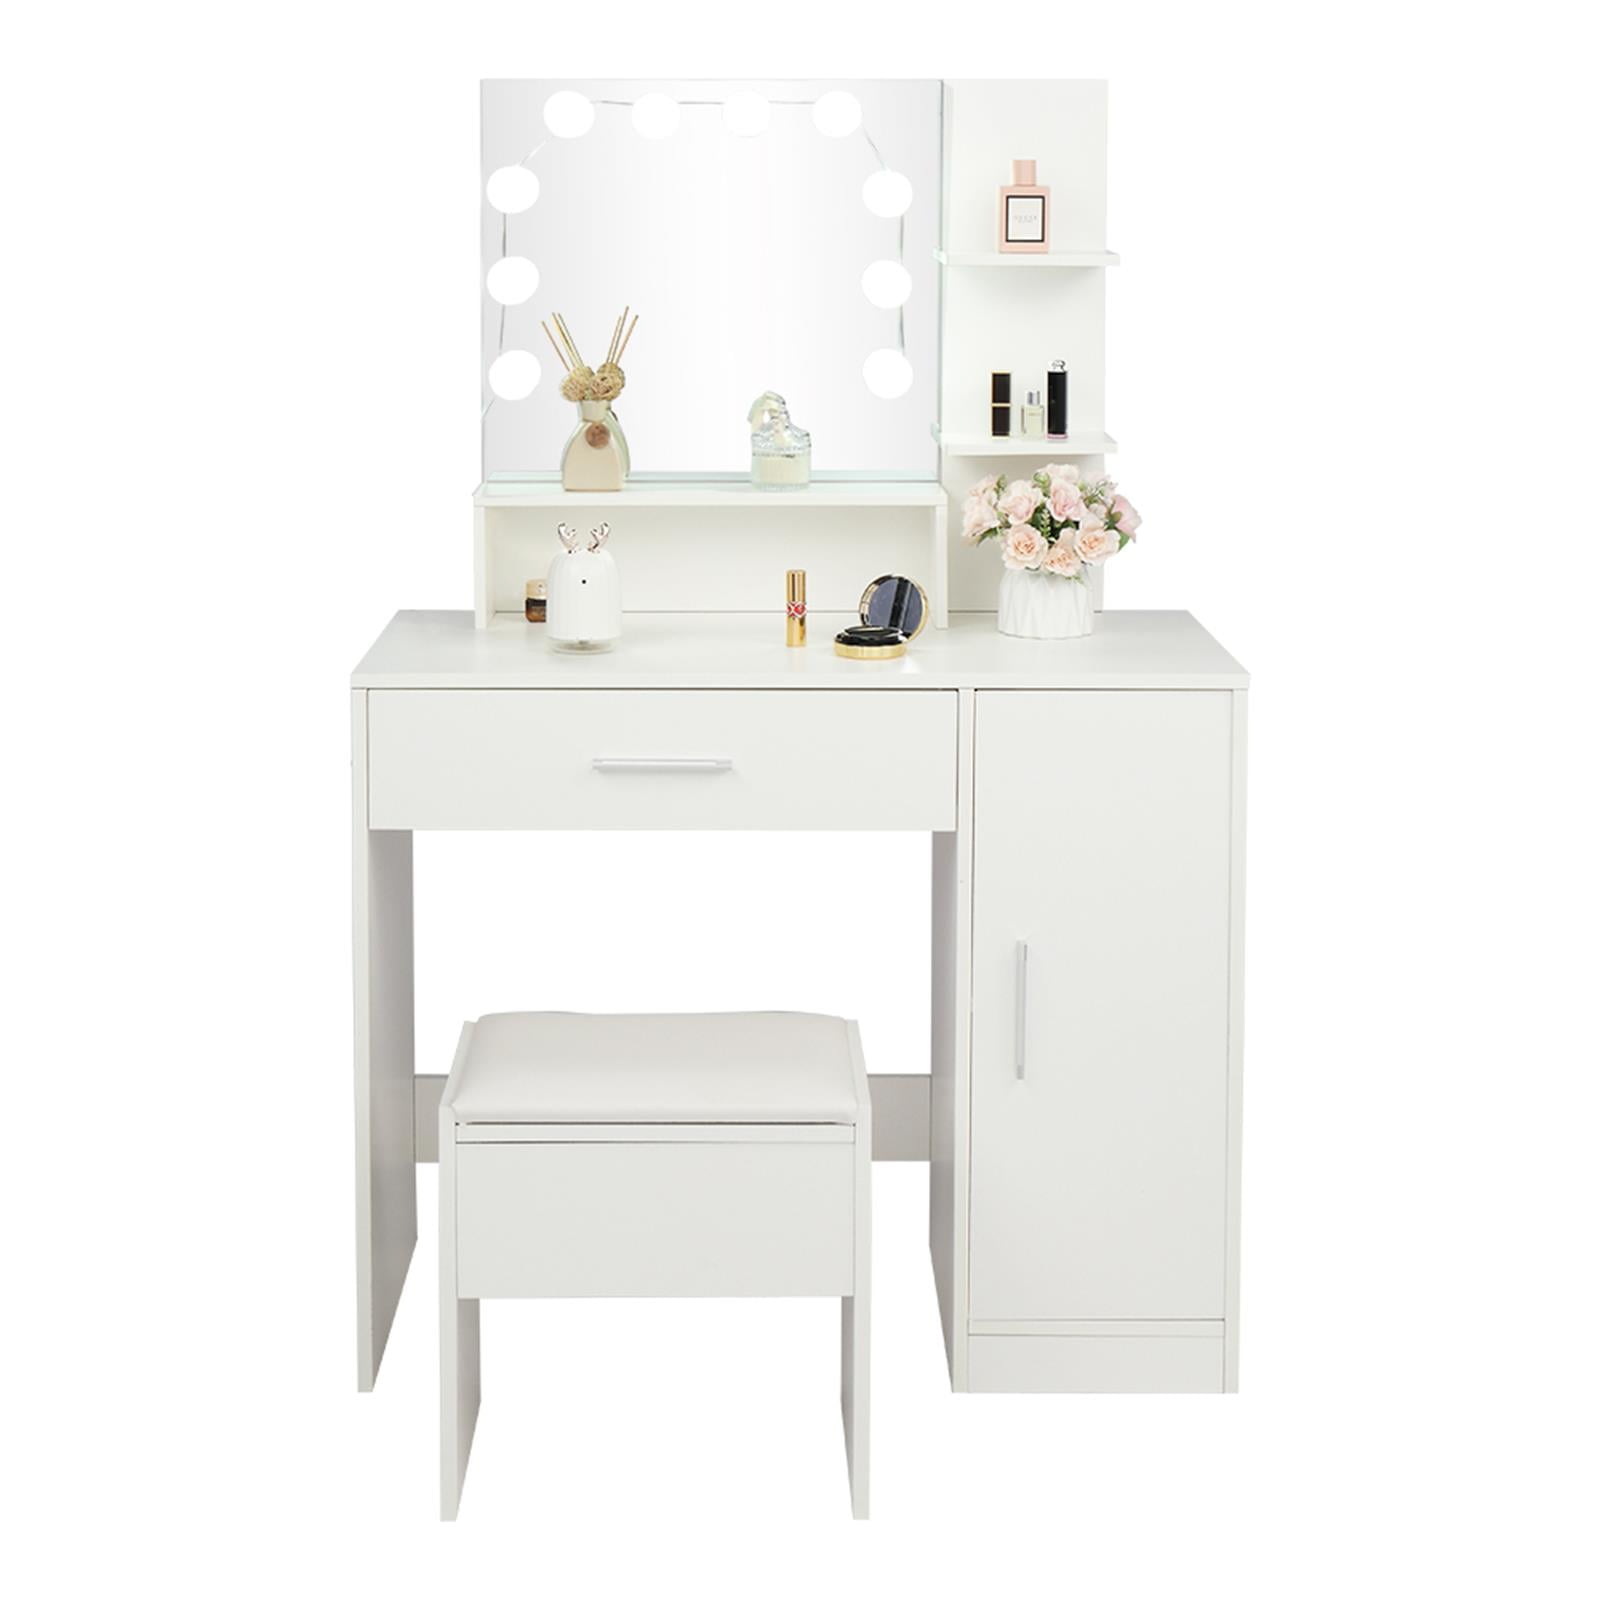 Ktaxon Vanity Set With Lighted Mirror, Makeup Vanity And Storage